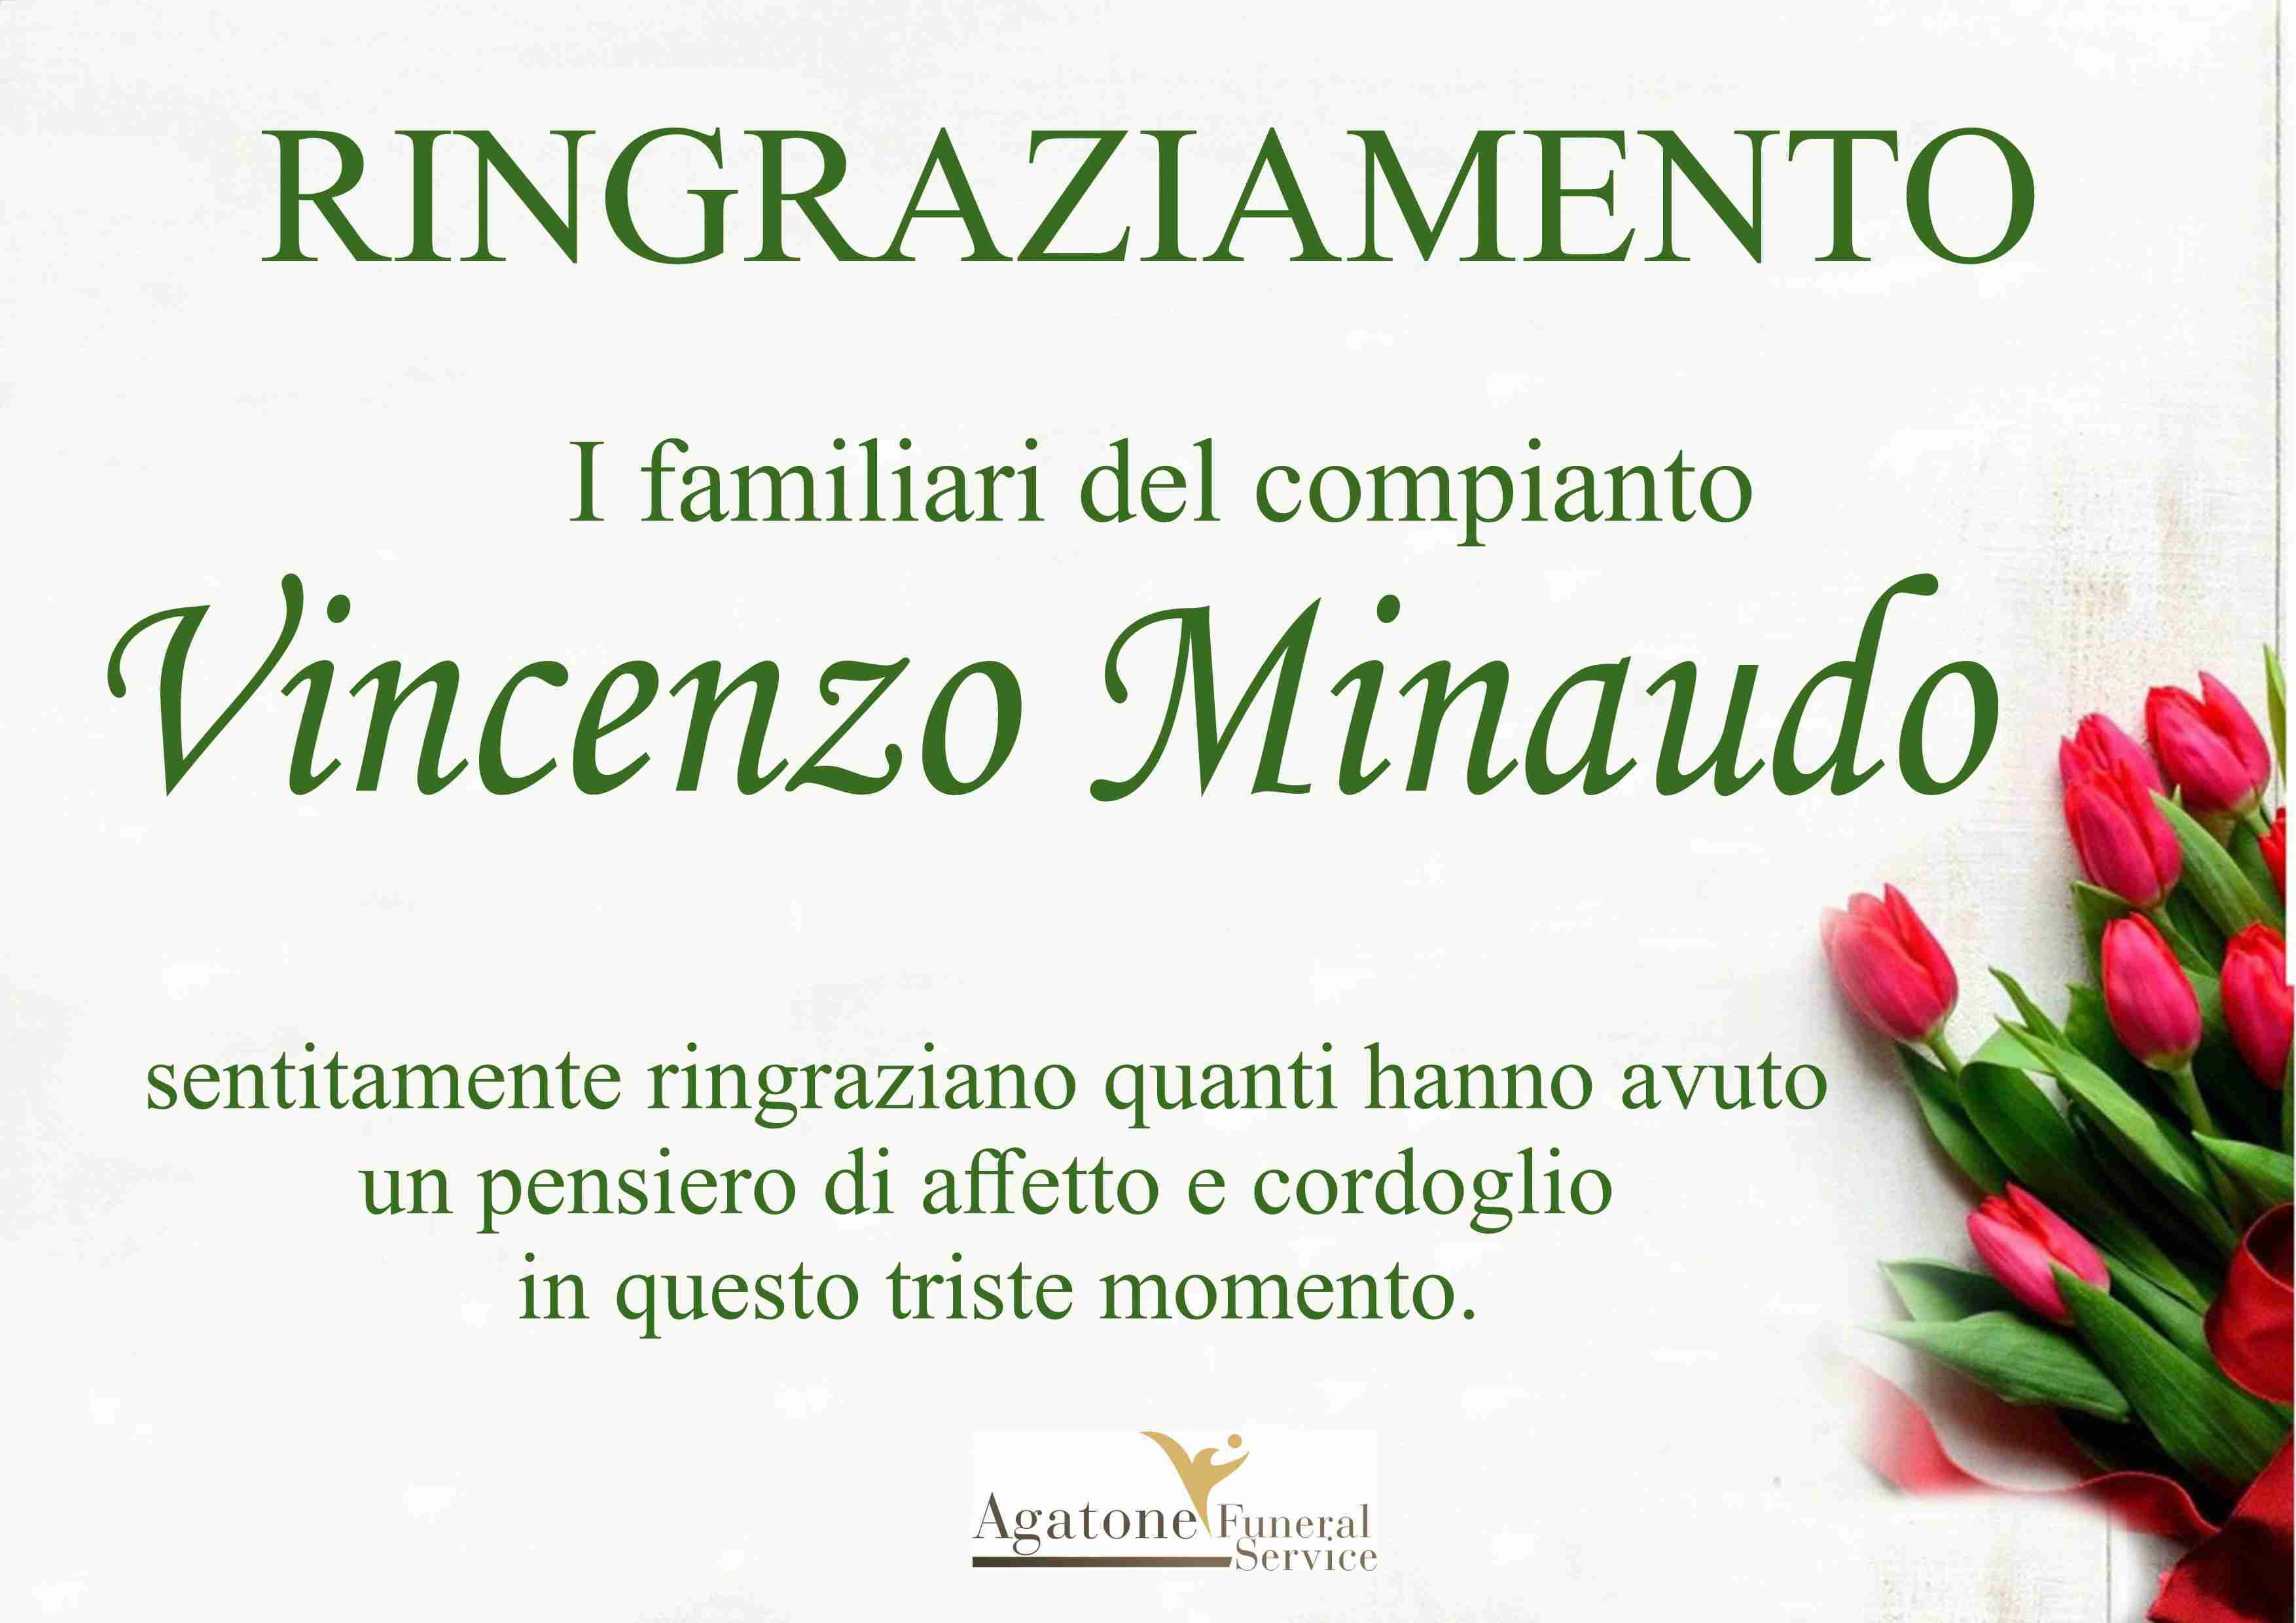 Vincenzo Minaudo